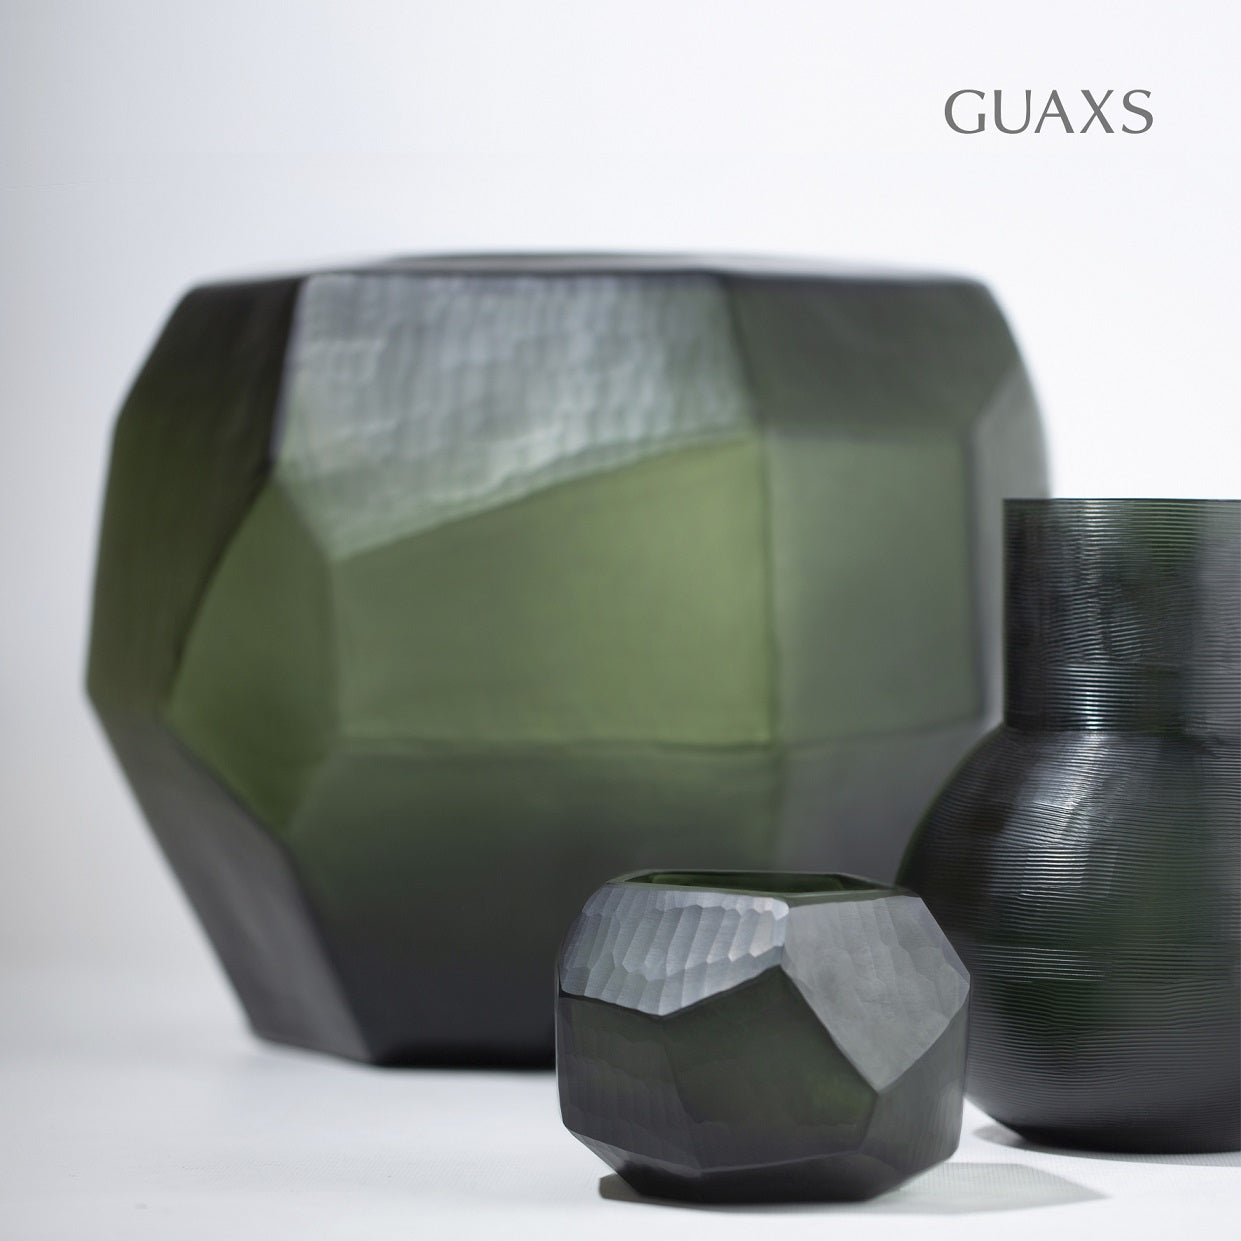 GUAXS - Cubistic round - Black steelgrey $995.00